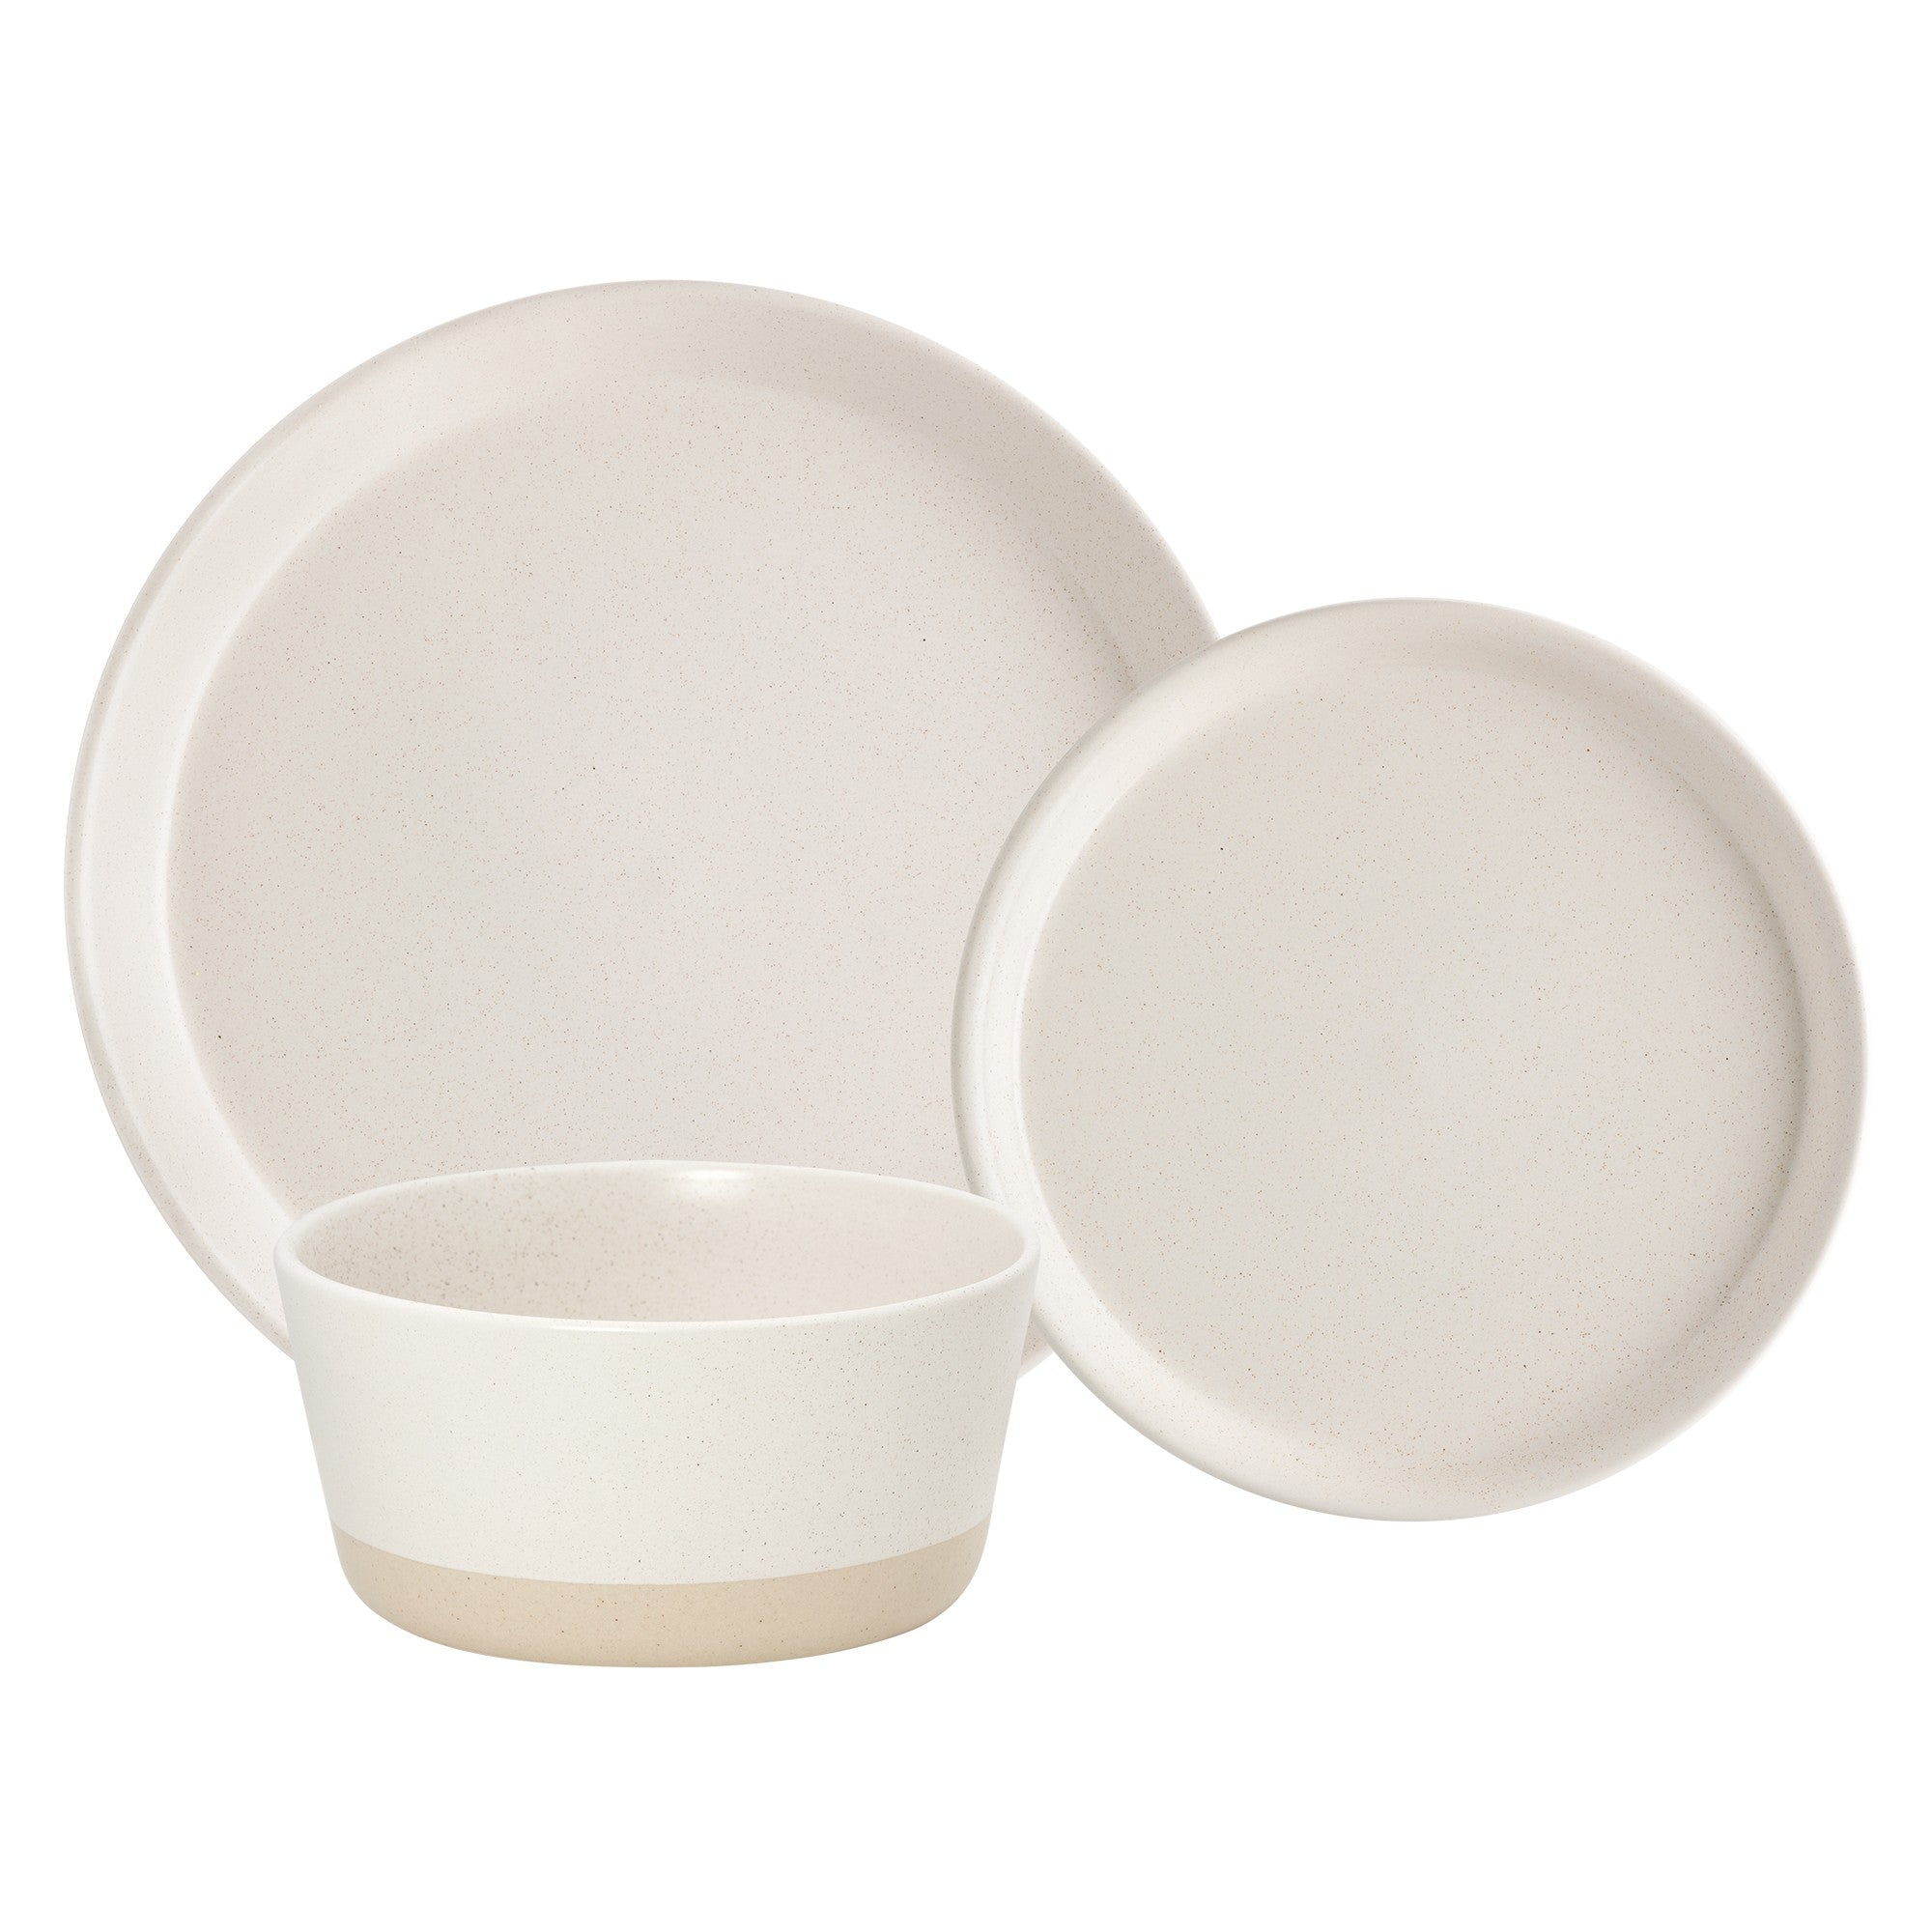 title:Safdie & Co. Dinnerset 12PC Stoneware 2 Tone Cream;color:Cream